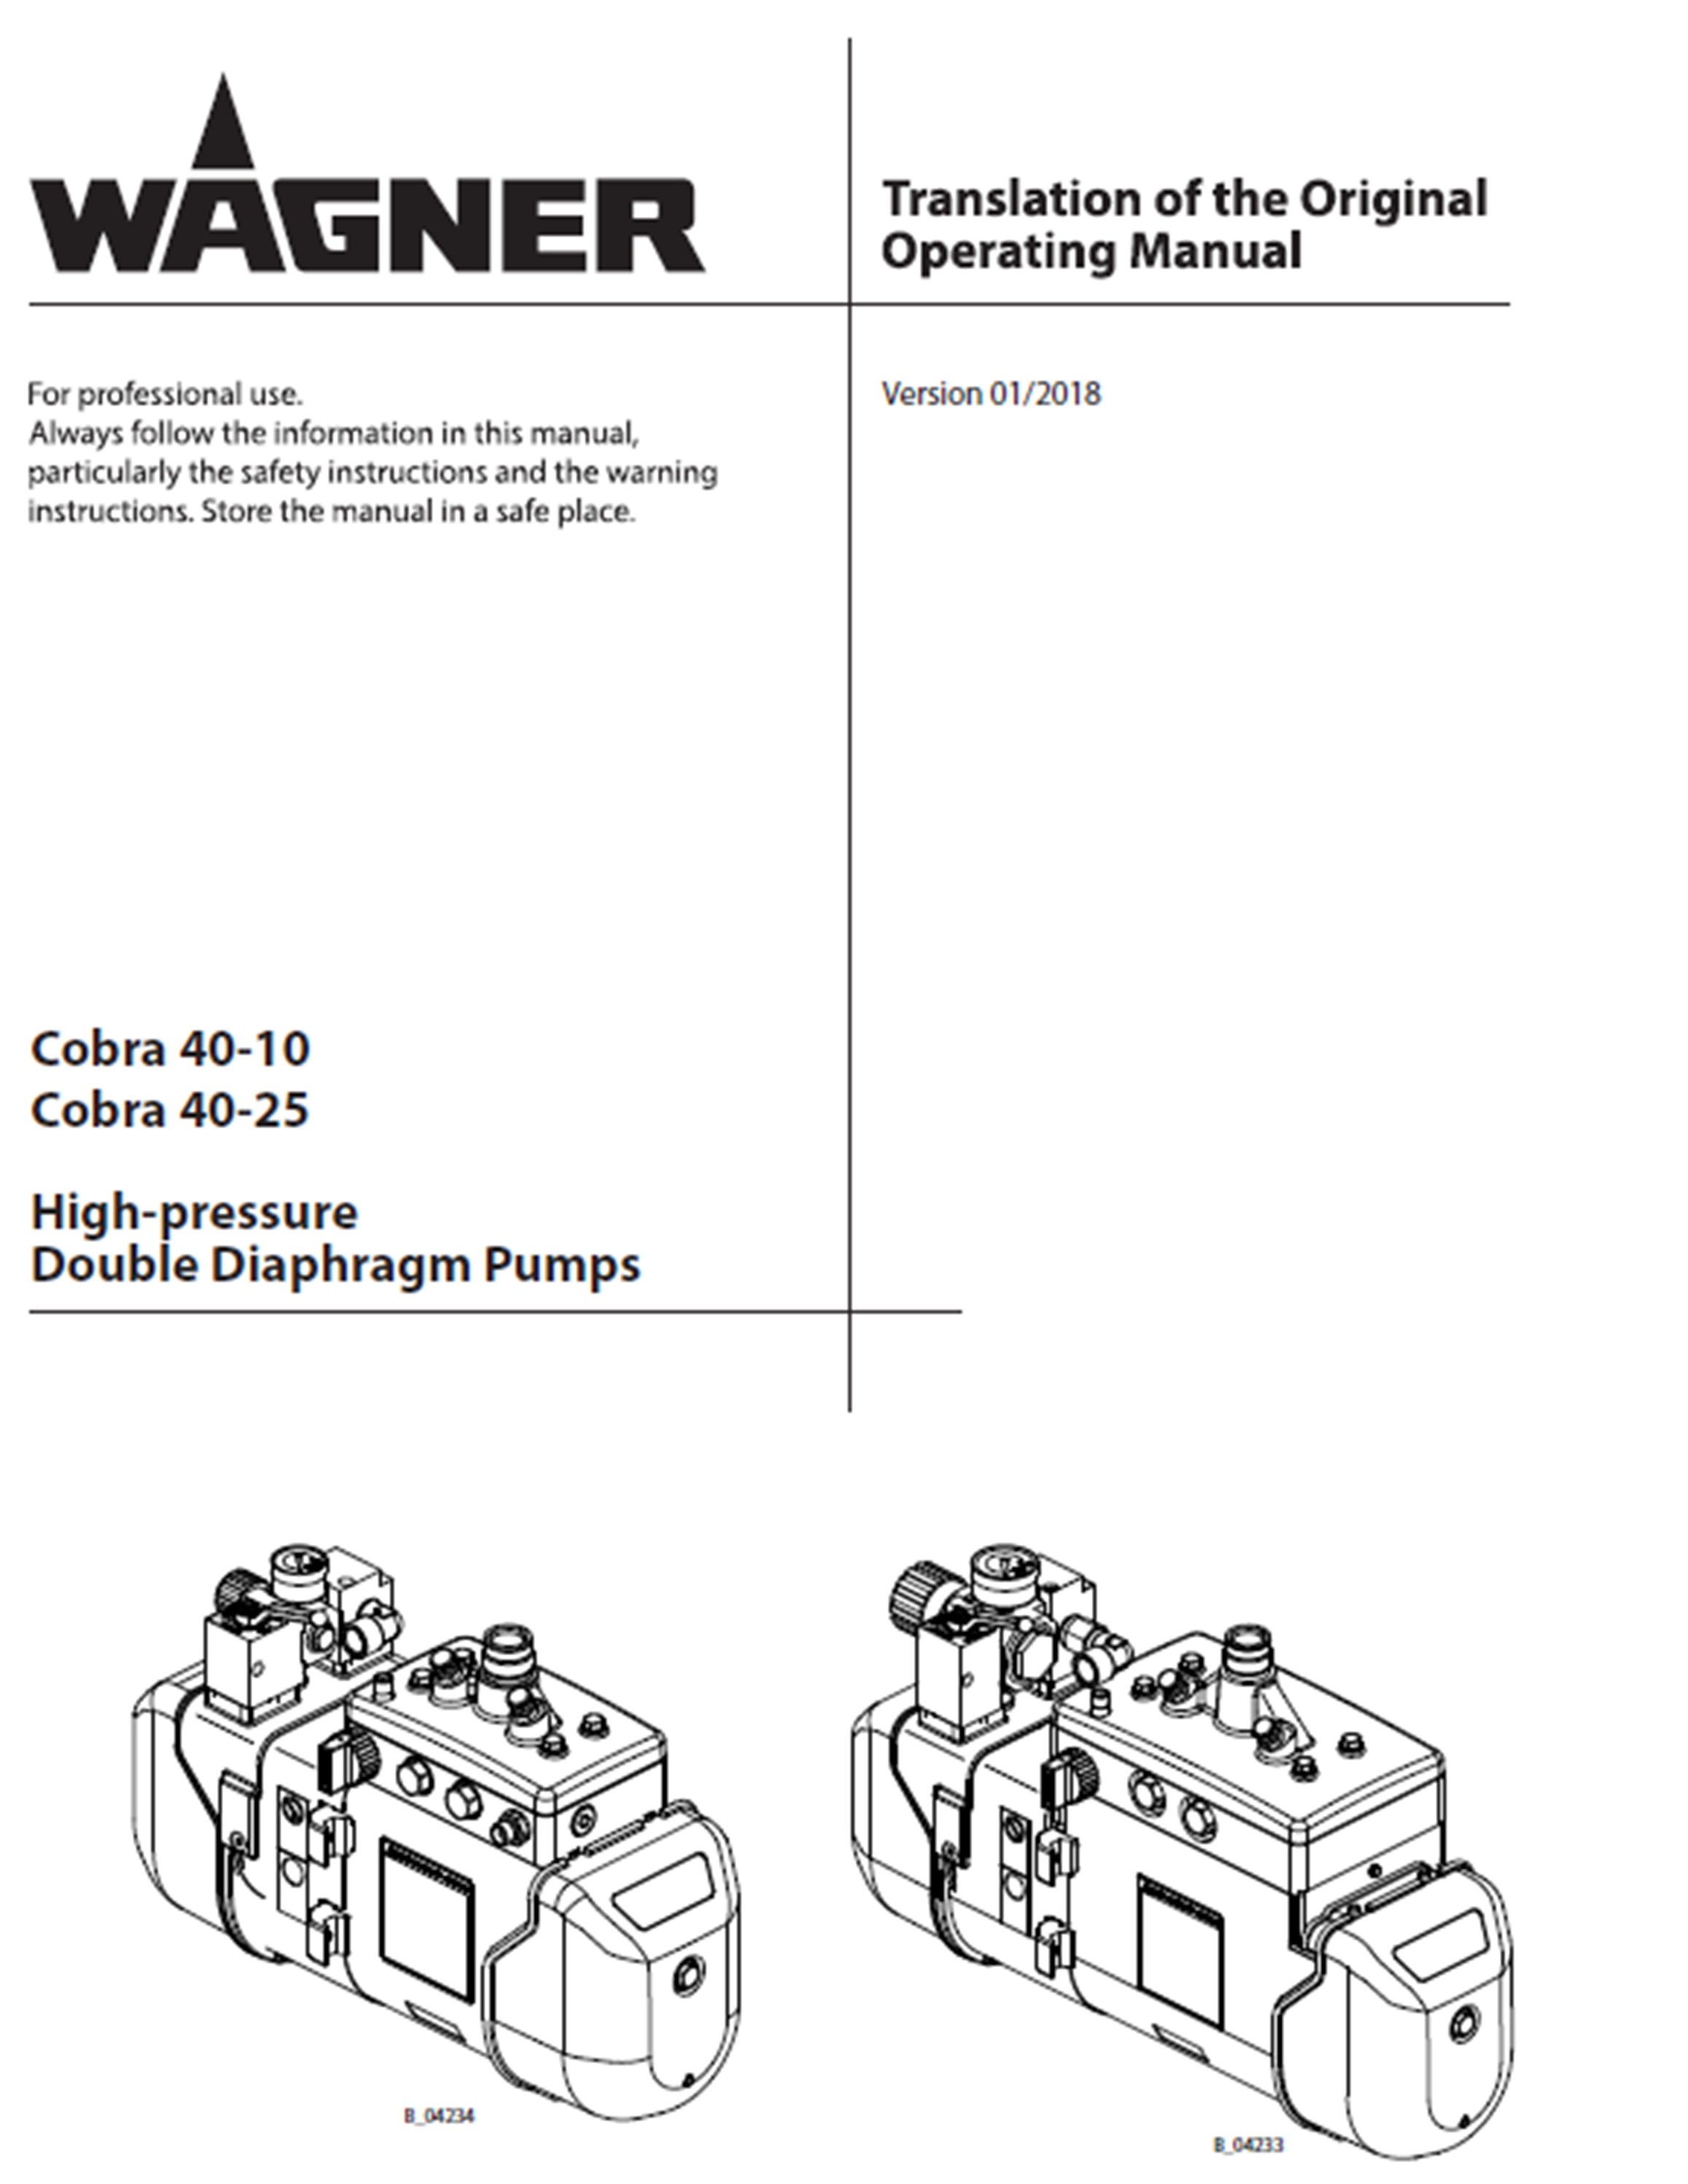 English Manual for the Cobra 40-10 and Cobra 40-25